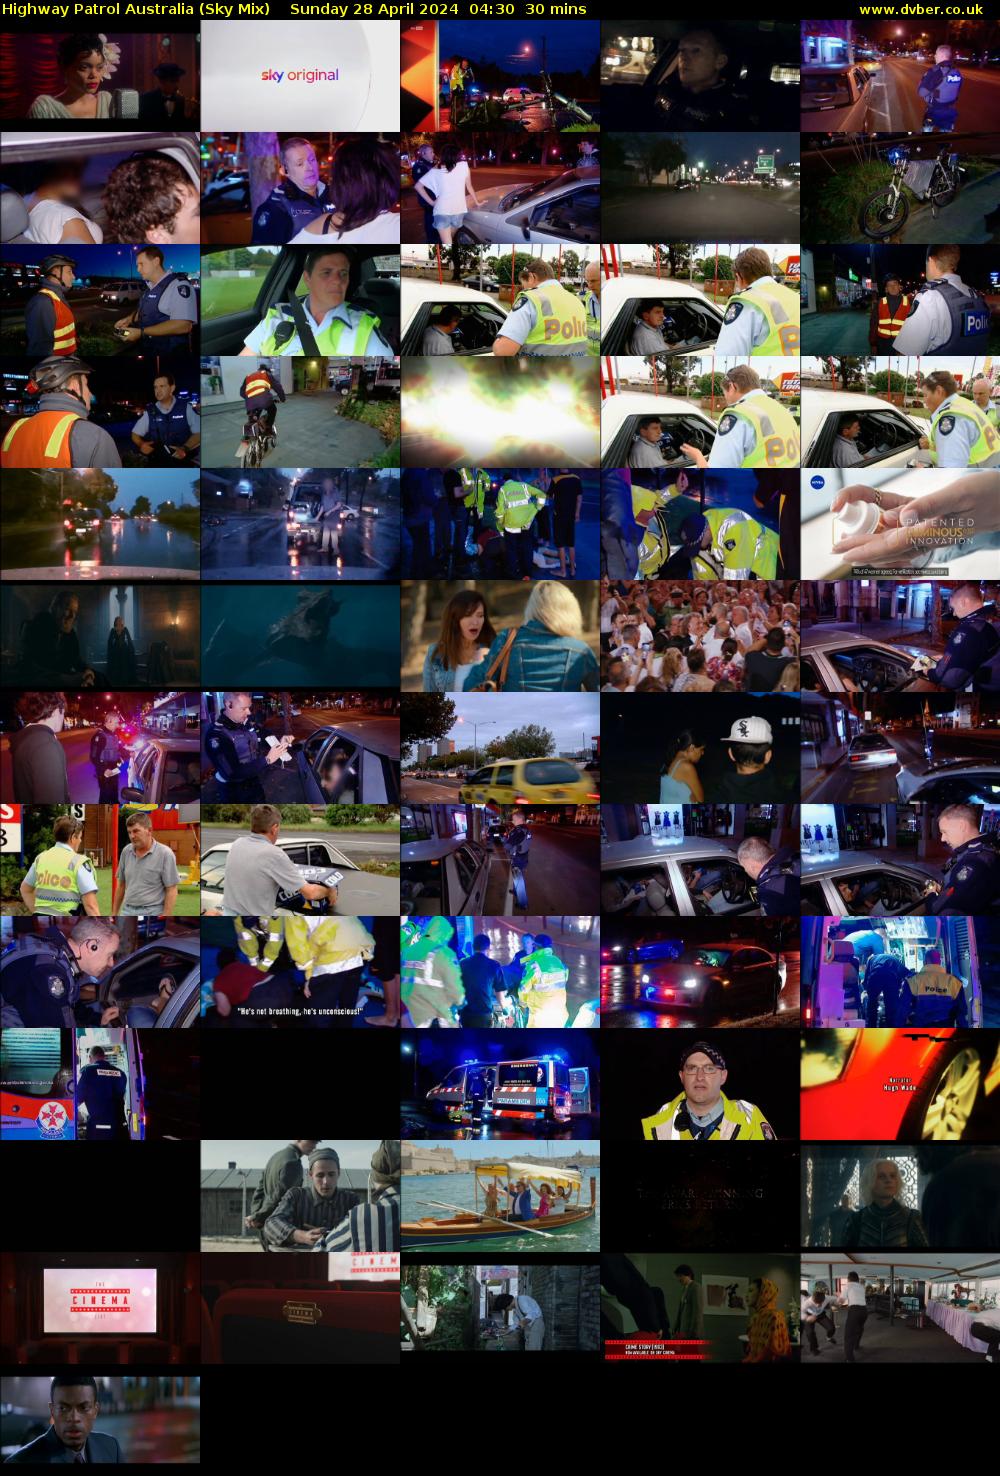 Highway Patrol Australia (Sky Mix) Sunday 28 April 2024 04:30 - 05:00